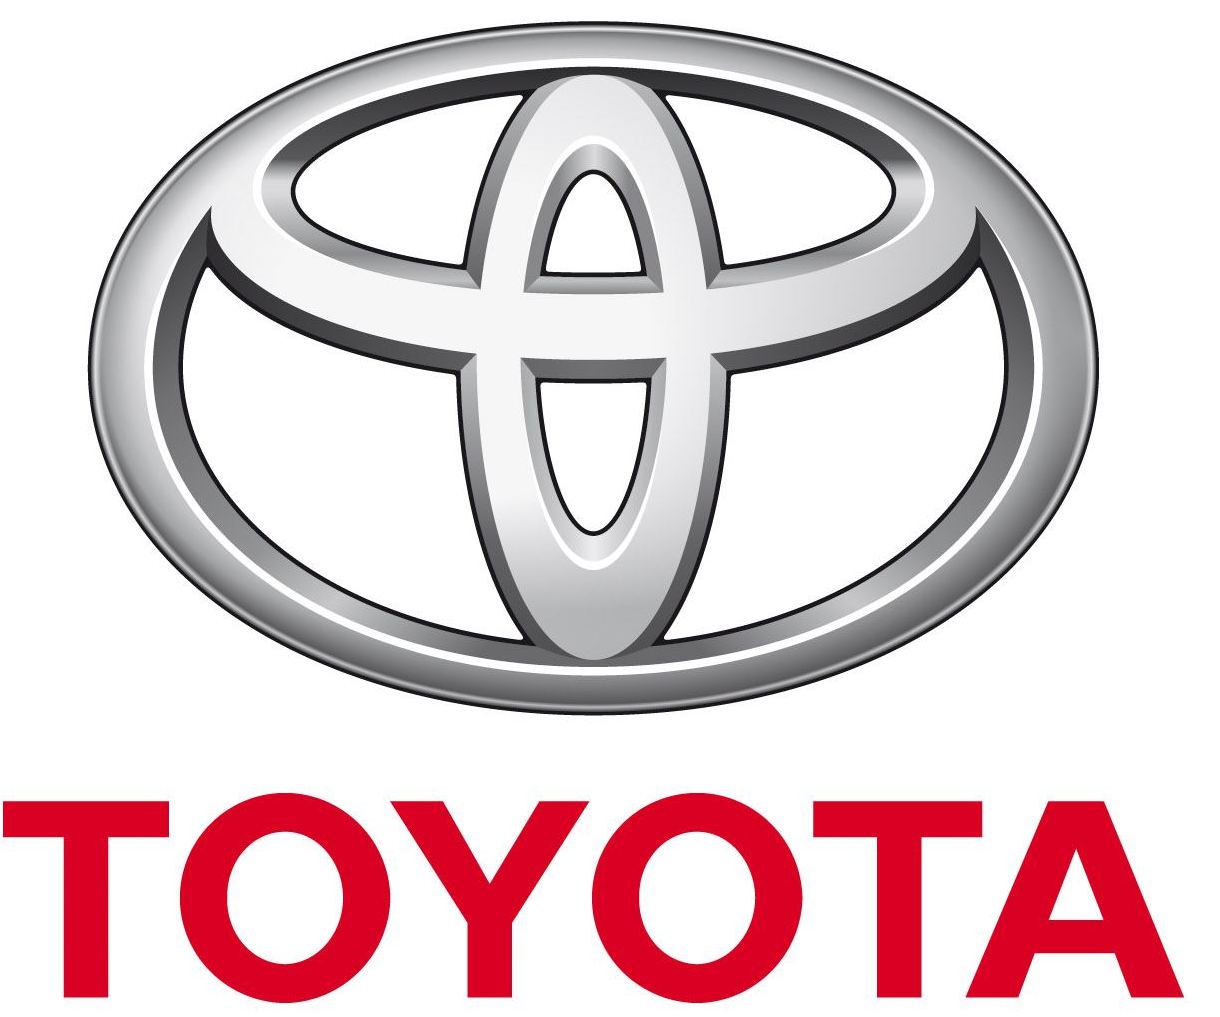 Toyota_Logo_Newes.jpg